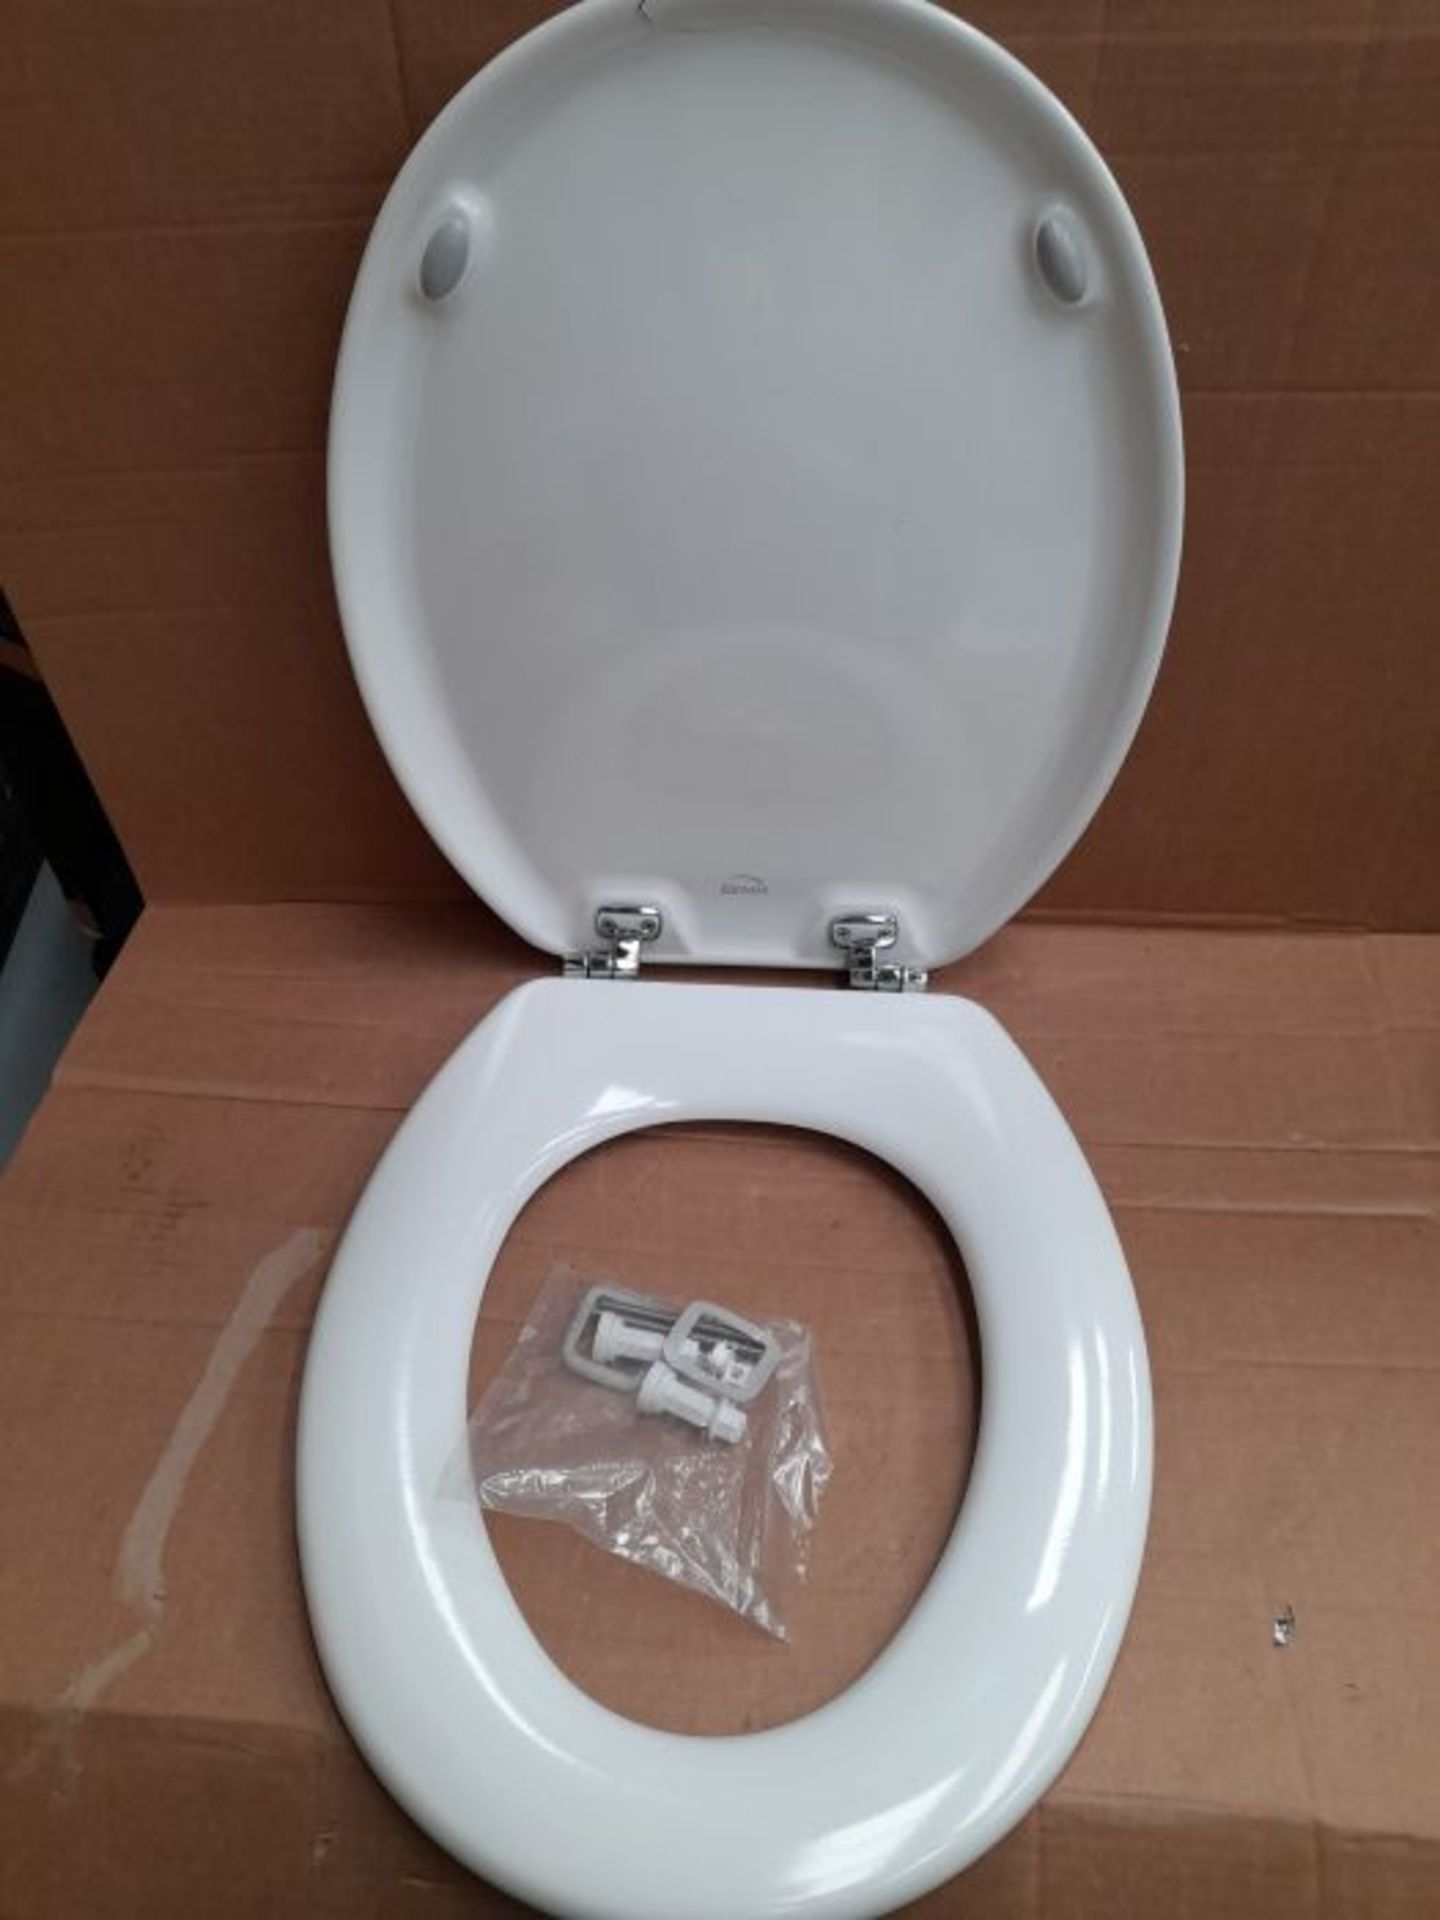 [CRACKED] Bemis 4403CP Alba STAY TIGHT Toilet Seat - White, 6.0 cm*48.8 cm*37.6 cm - Image 2 of 3